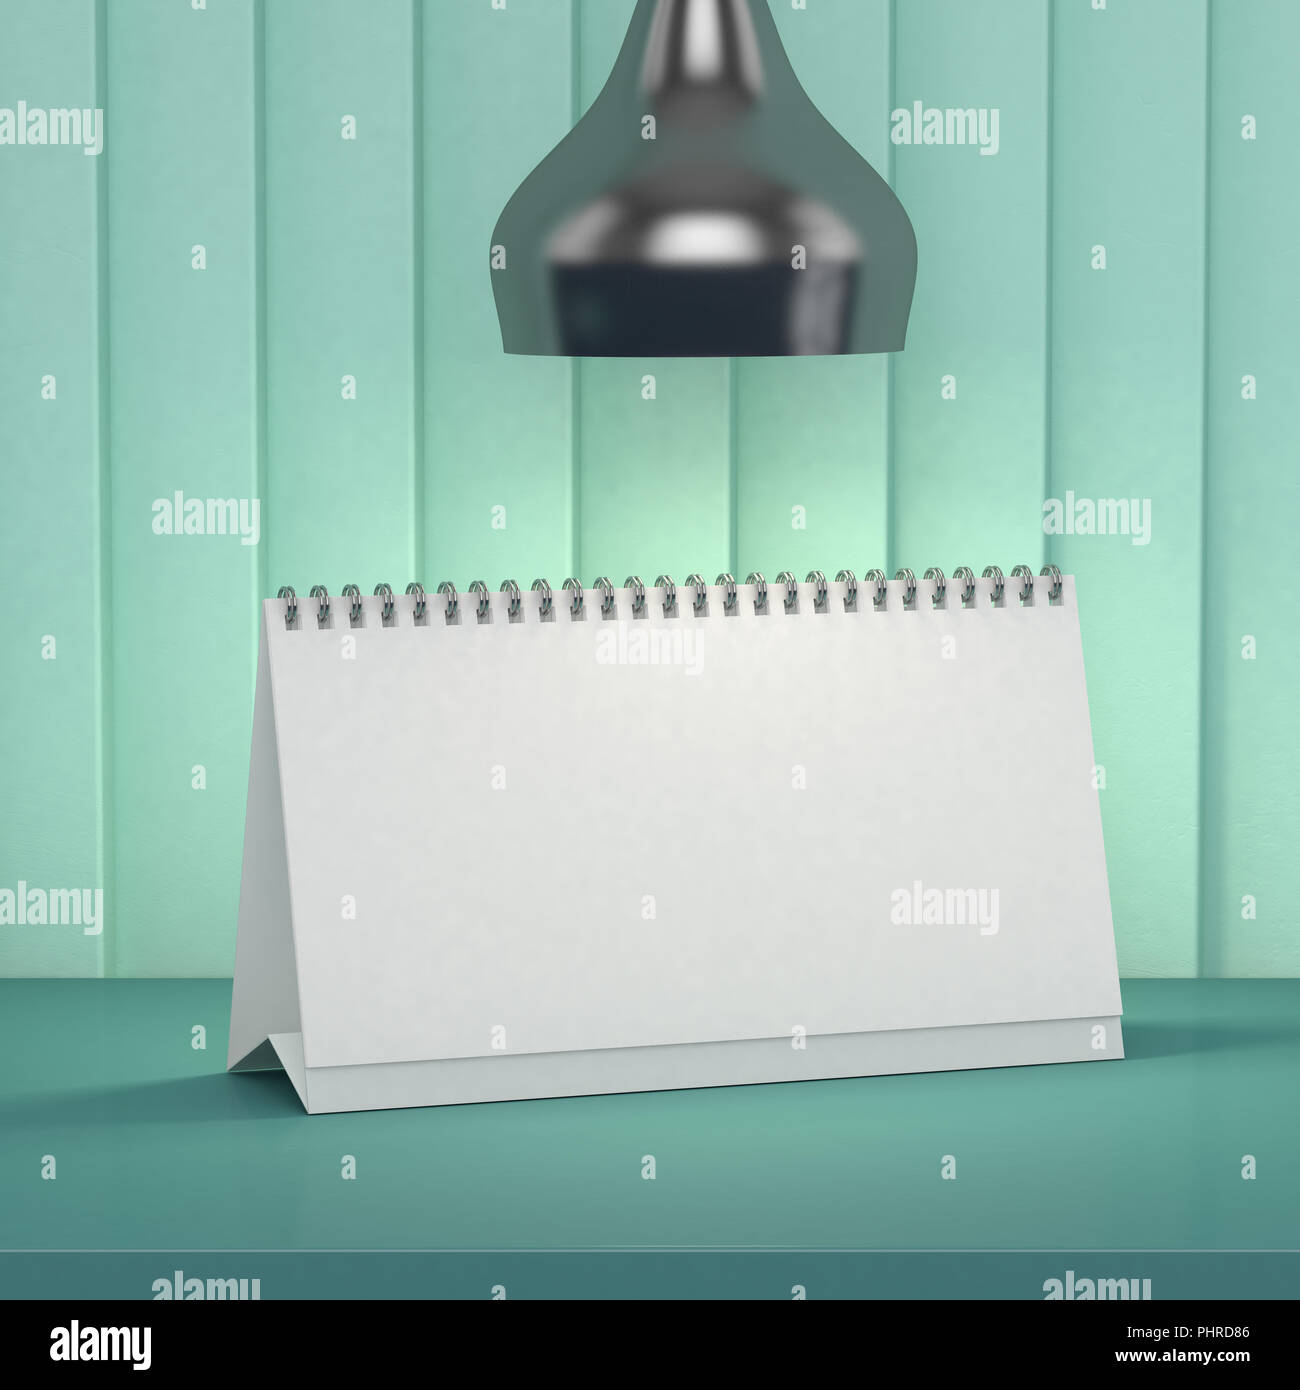 Empty Desk Calendar Mockup Design Concept 3d Rendering Stock